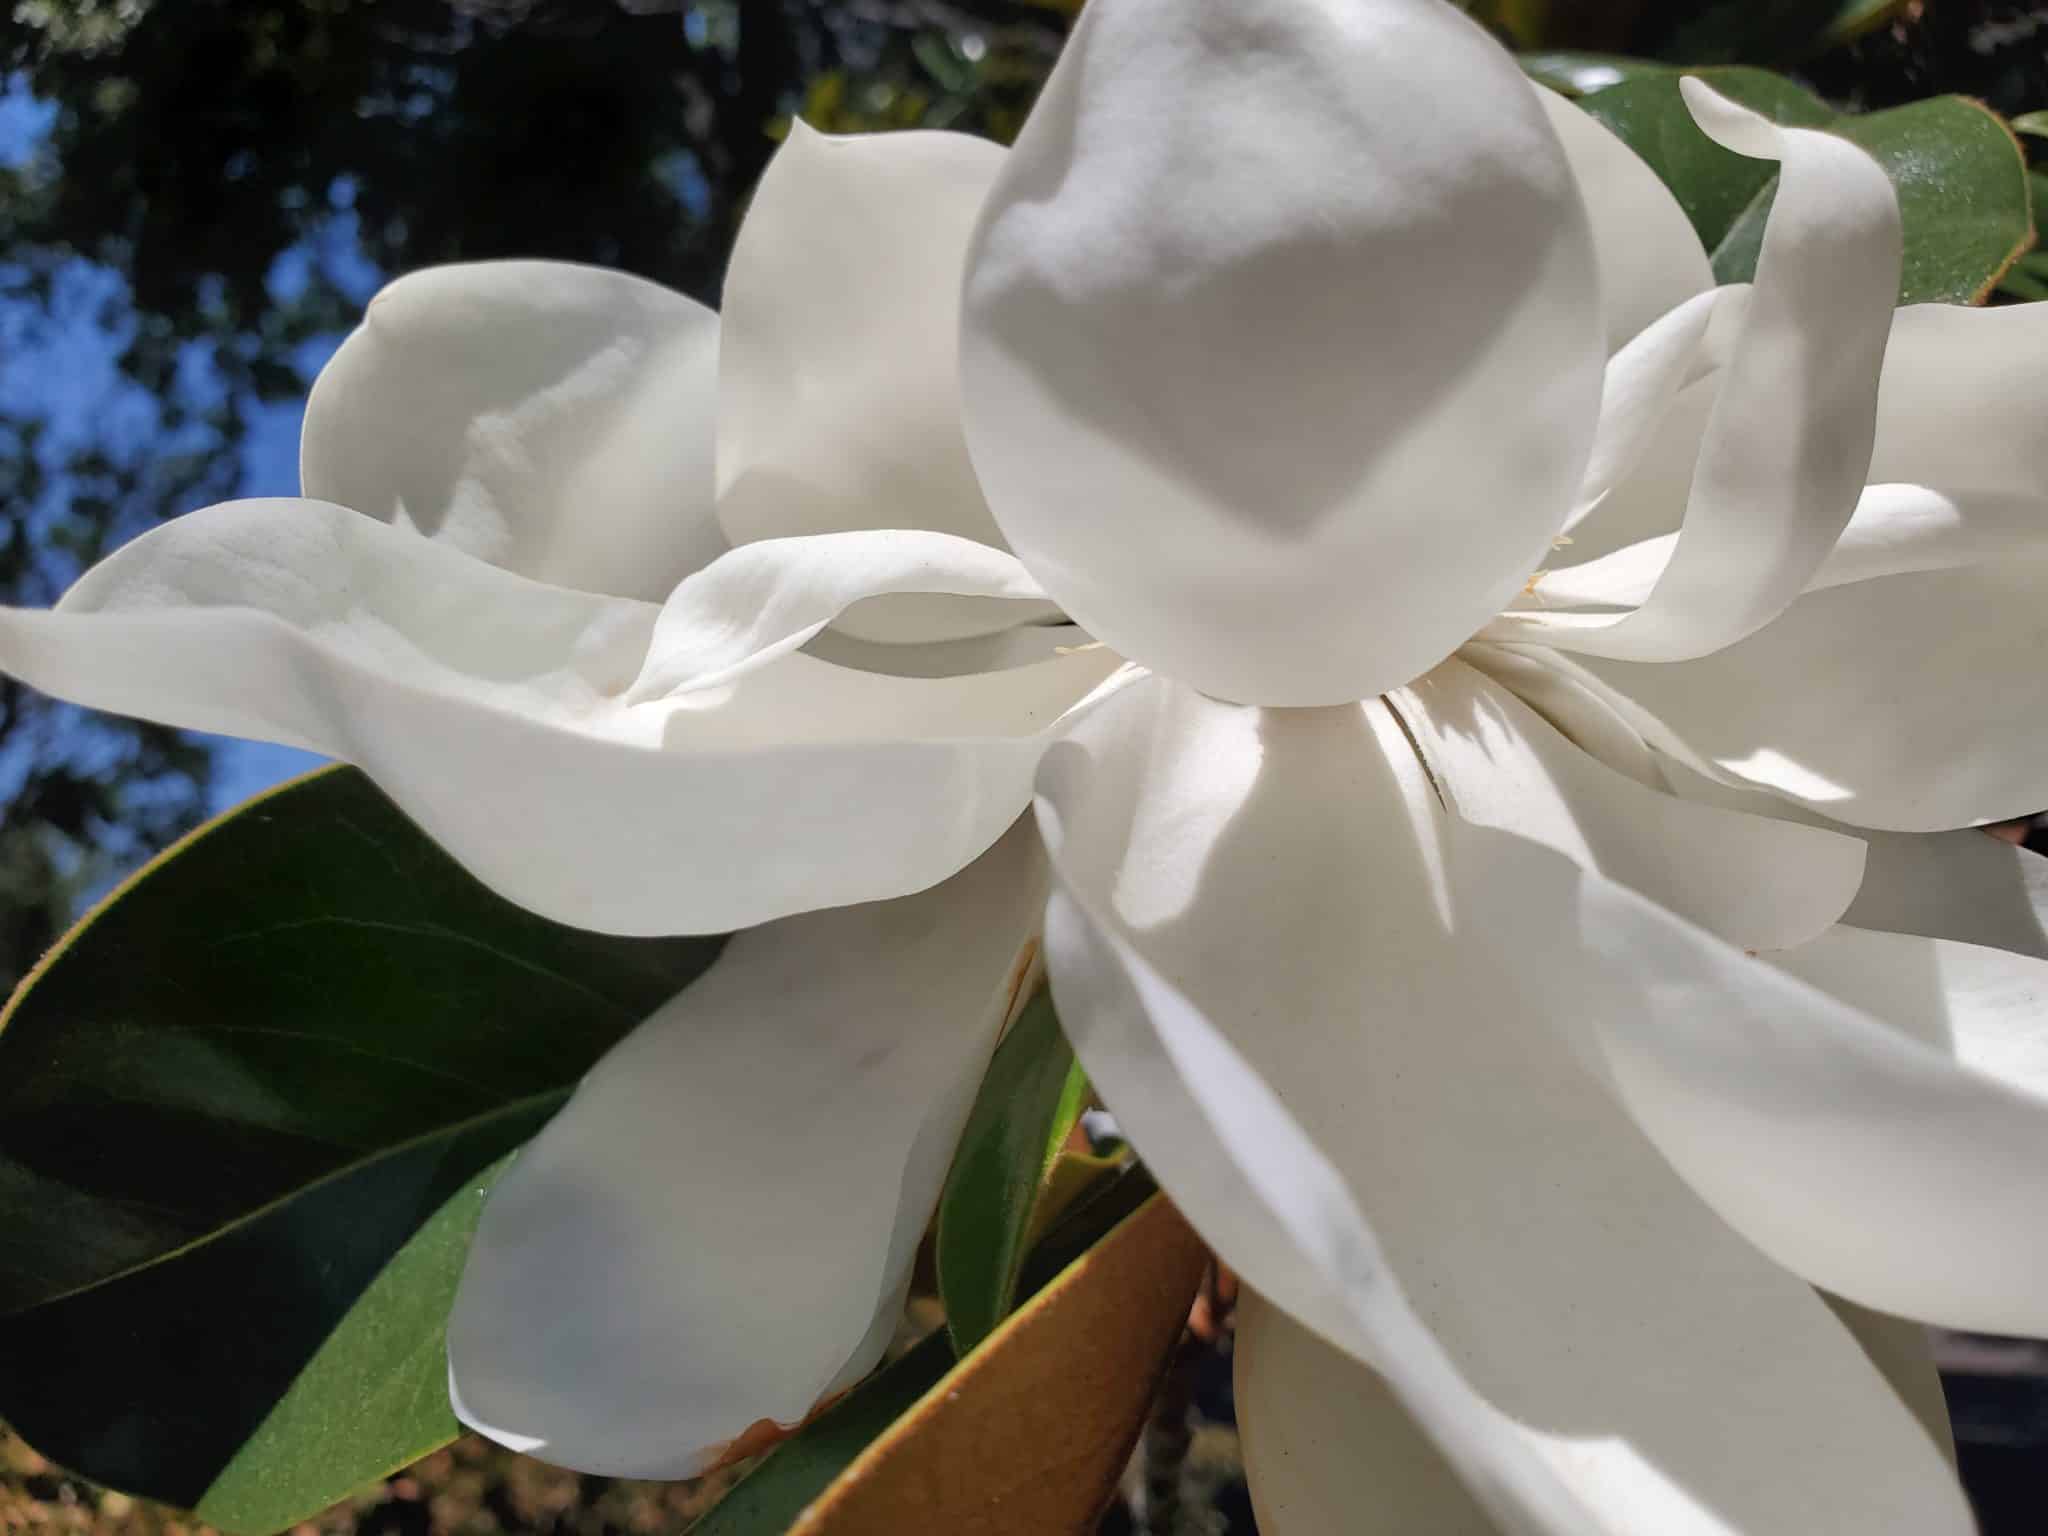 Big white petals of a magnolia flower.